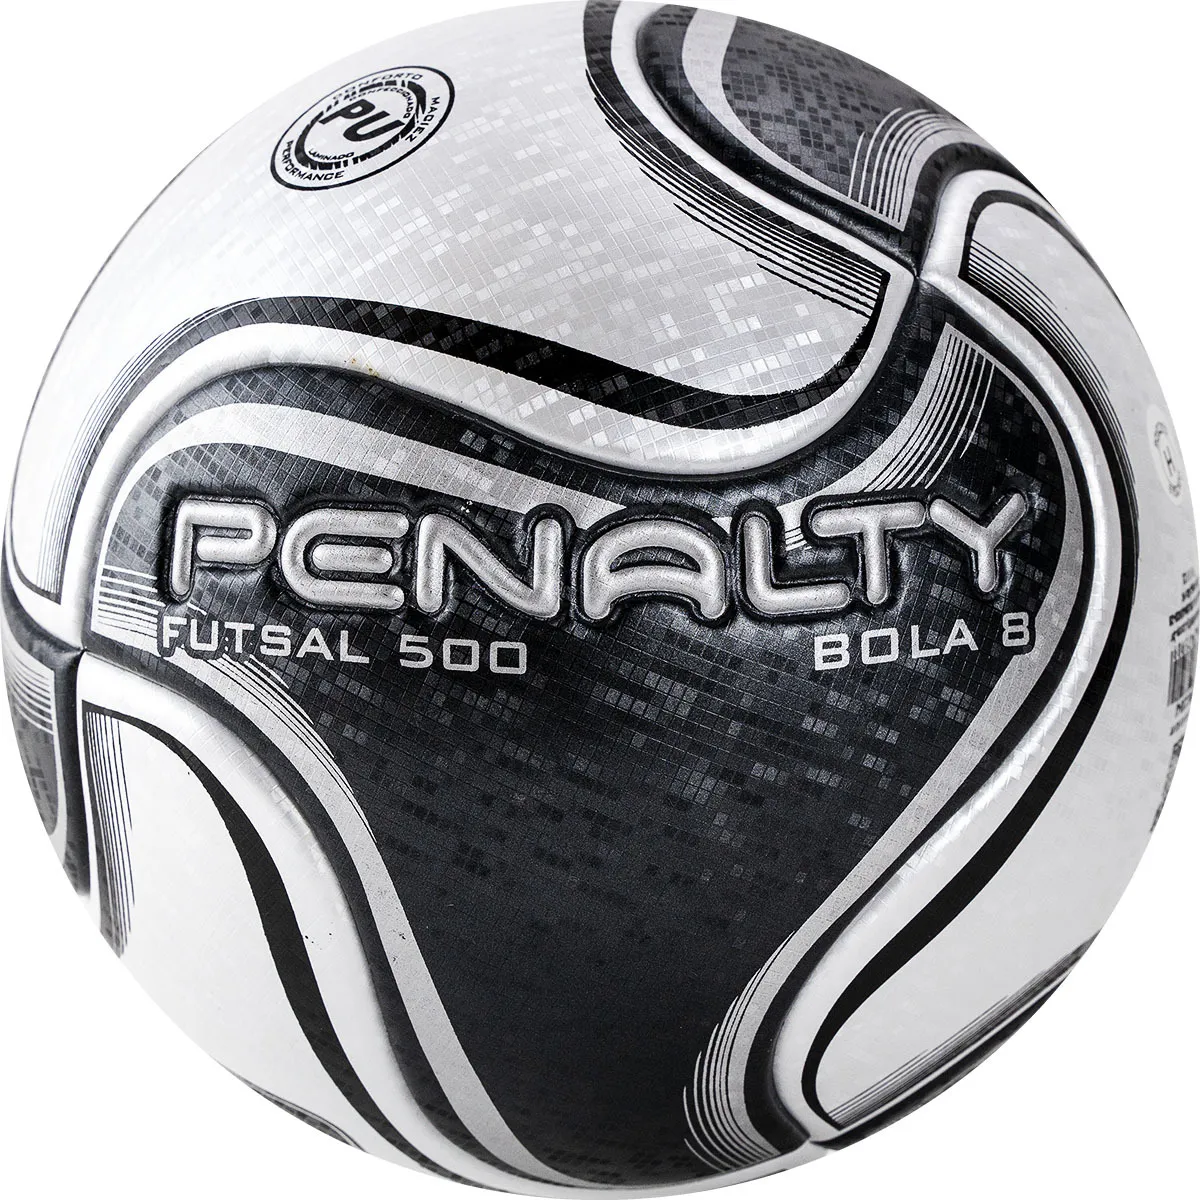 Фото Мяч футзальный Penalty Futsal 500 Bola 8 X №4 черно-белый 5212861110-U со склада магазина СпортЕВ